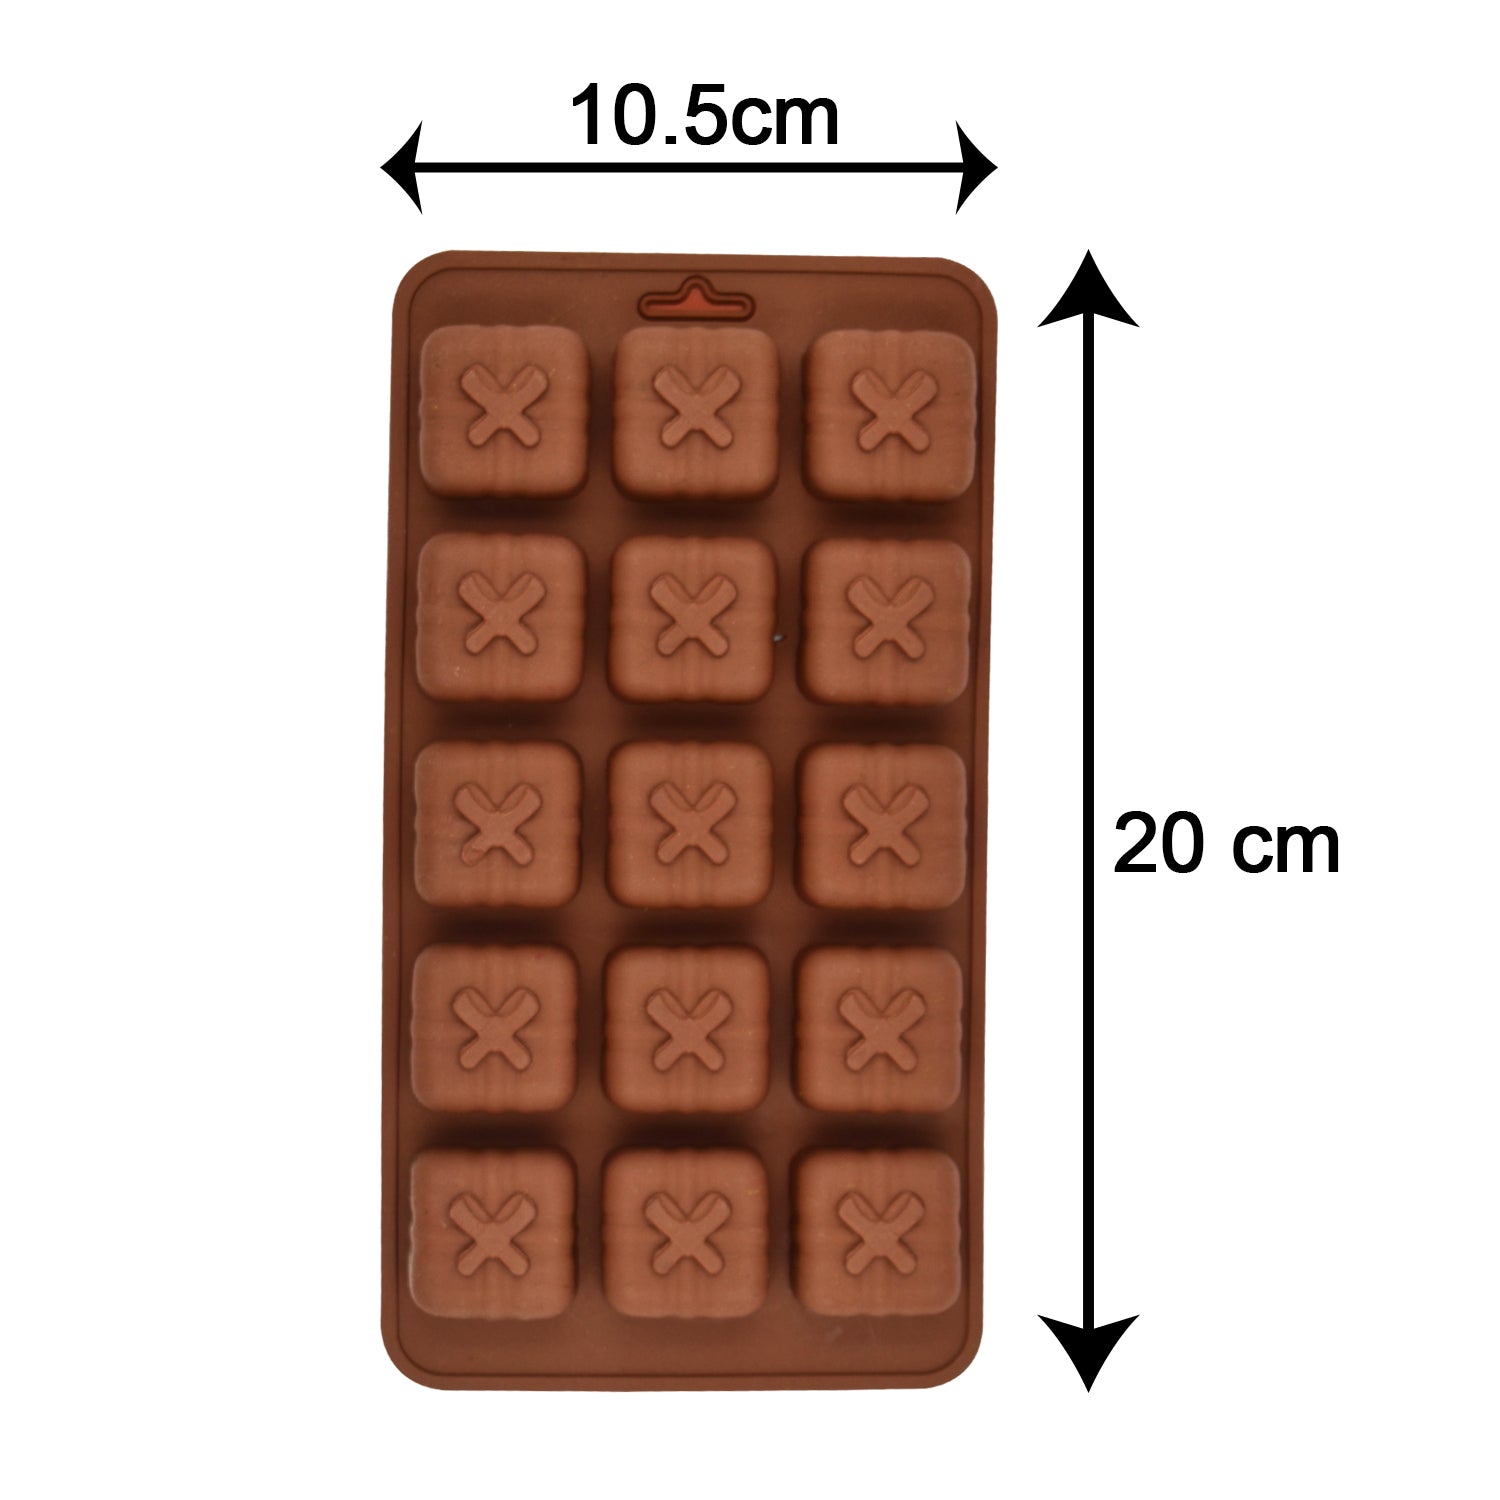 4632 15 Cavity Square Shape design Silicone Mold Baking Tray - India, 0.147 kgs